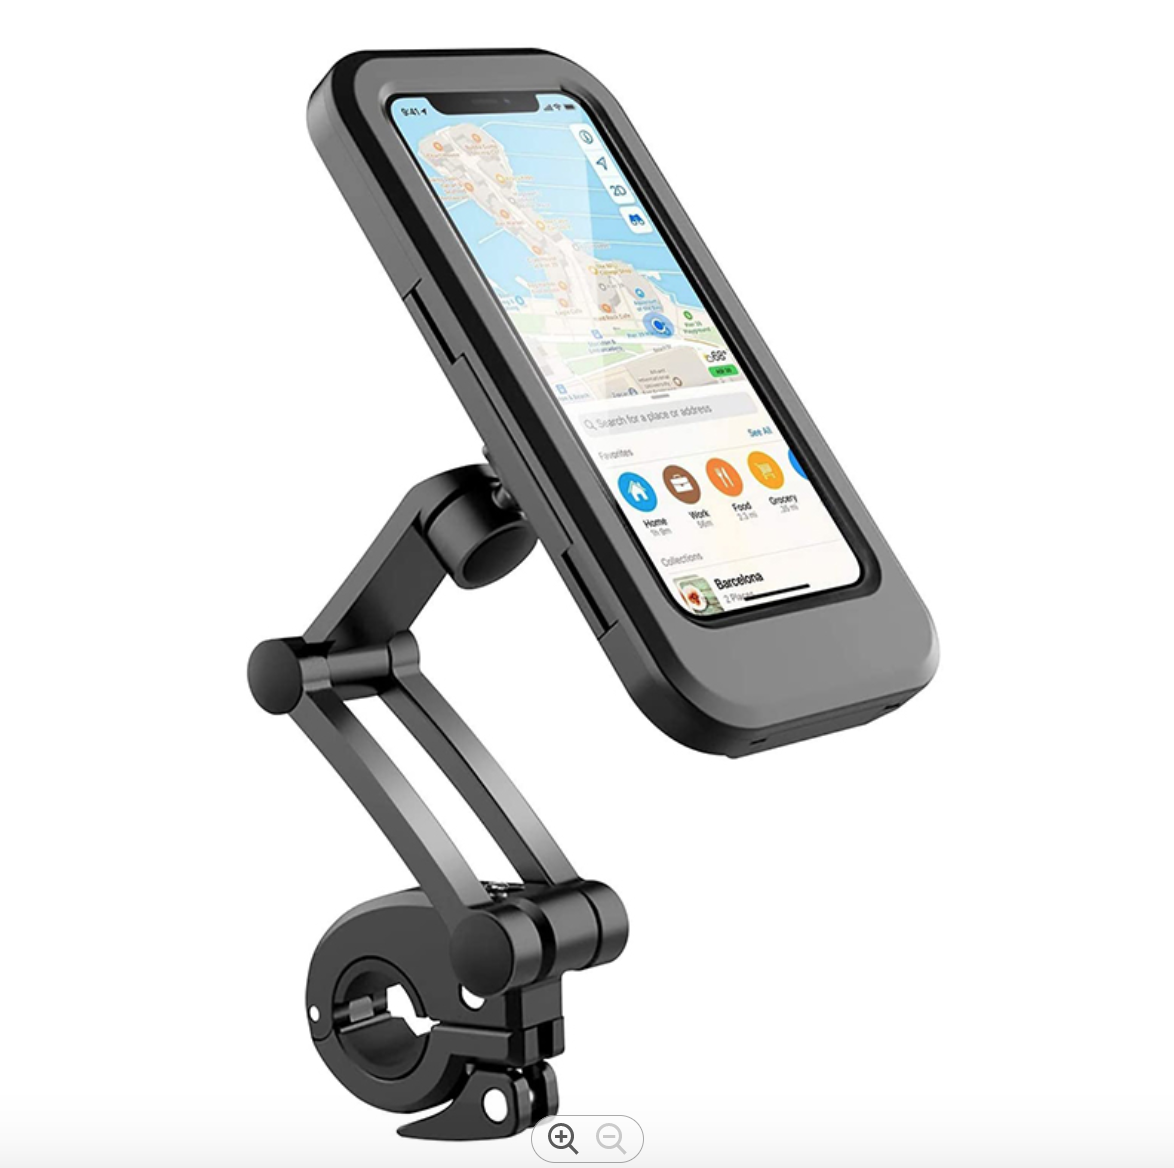 360° Waterproof Bicycle Mount GPS Bracket Bike Phone Case Handlebar Mount Holder 